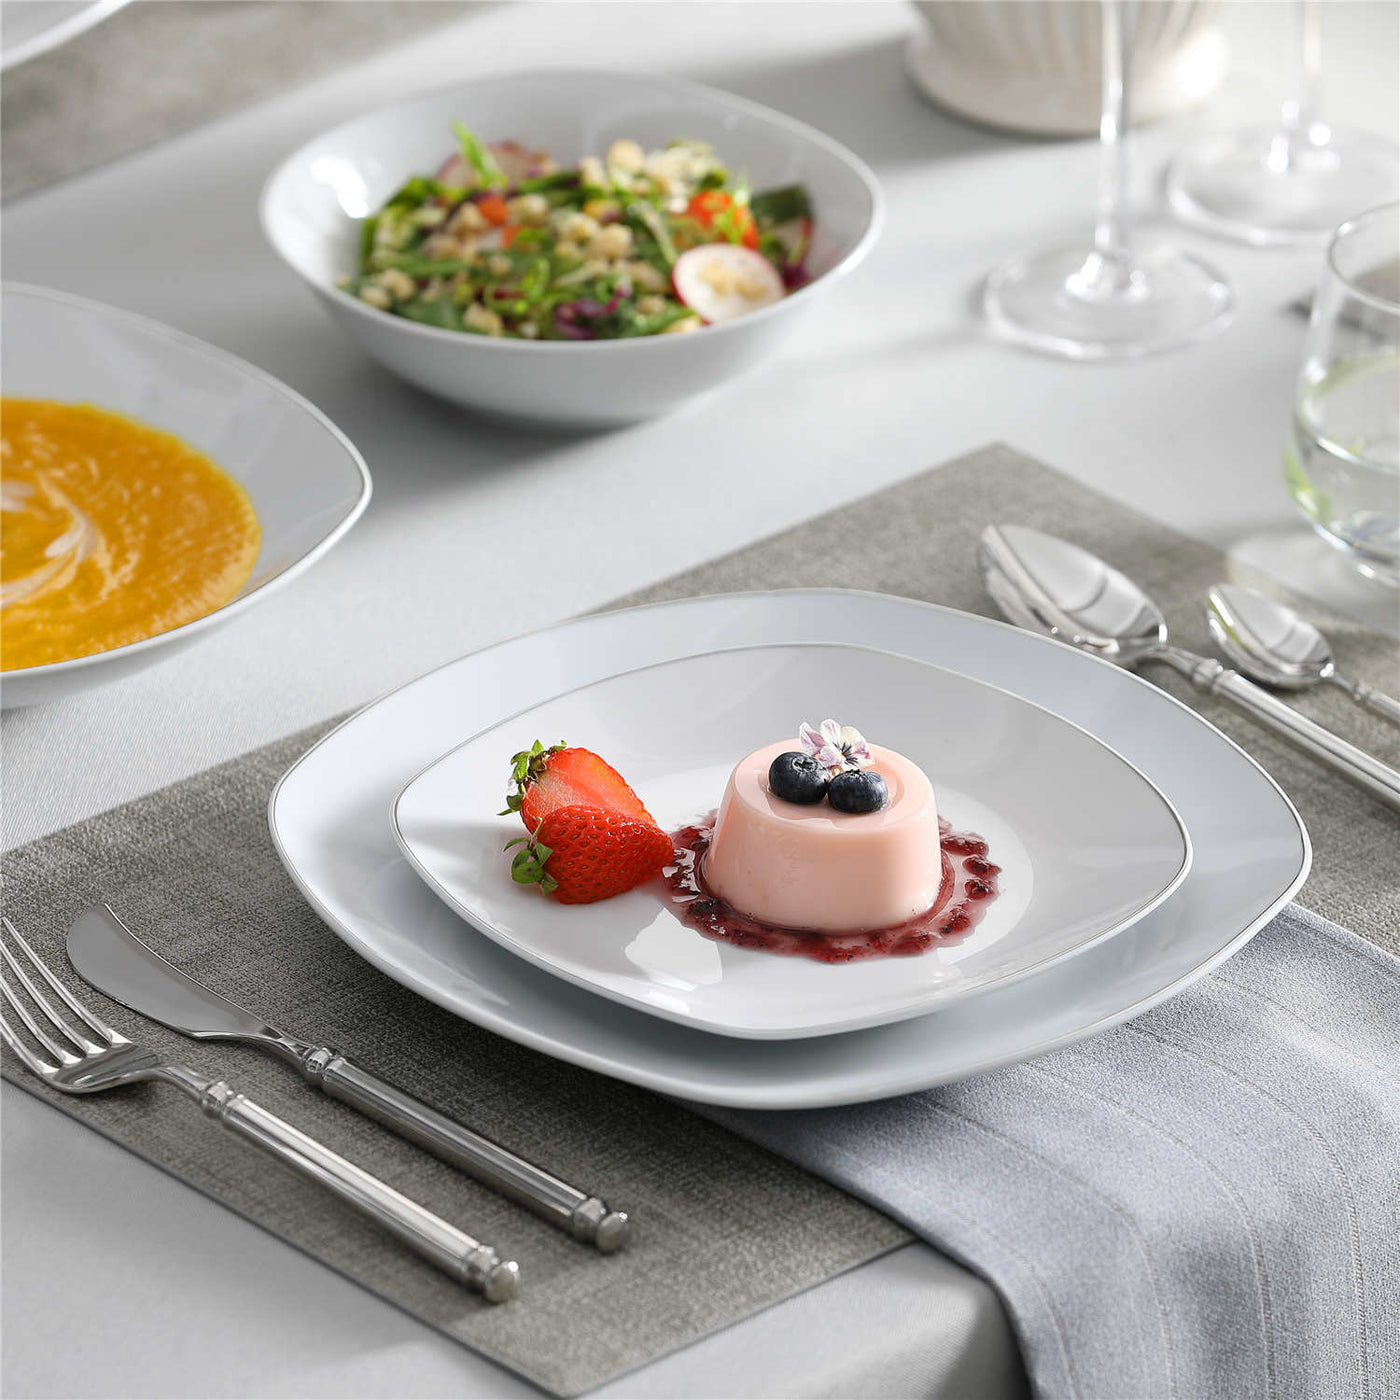 MALACASA Elisa 30-Piece White Porcelain Dinnerware Set (Service